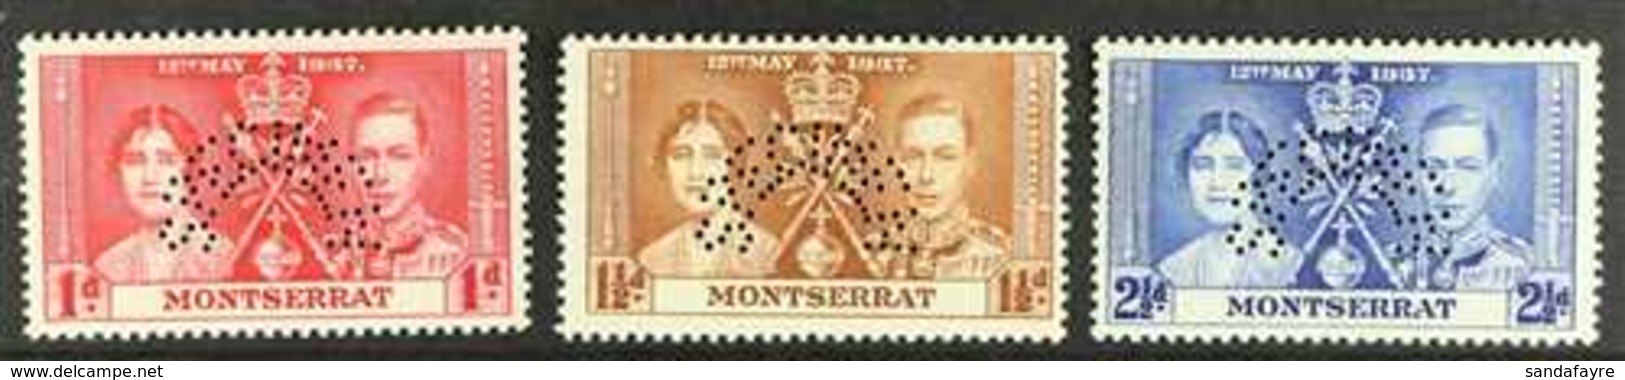 1937 Coronation Set, Perf. "SPECIMEN", SG 98/100s, Fine Never Hinged Mint. (3 Stamps) For More Images, Please Visit Http - Montserrat